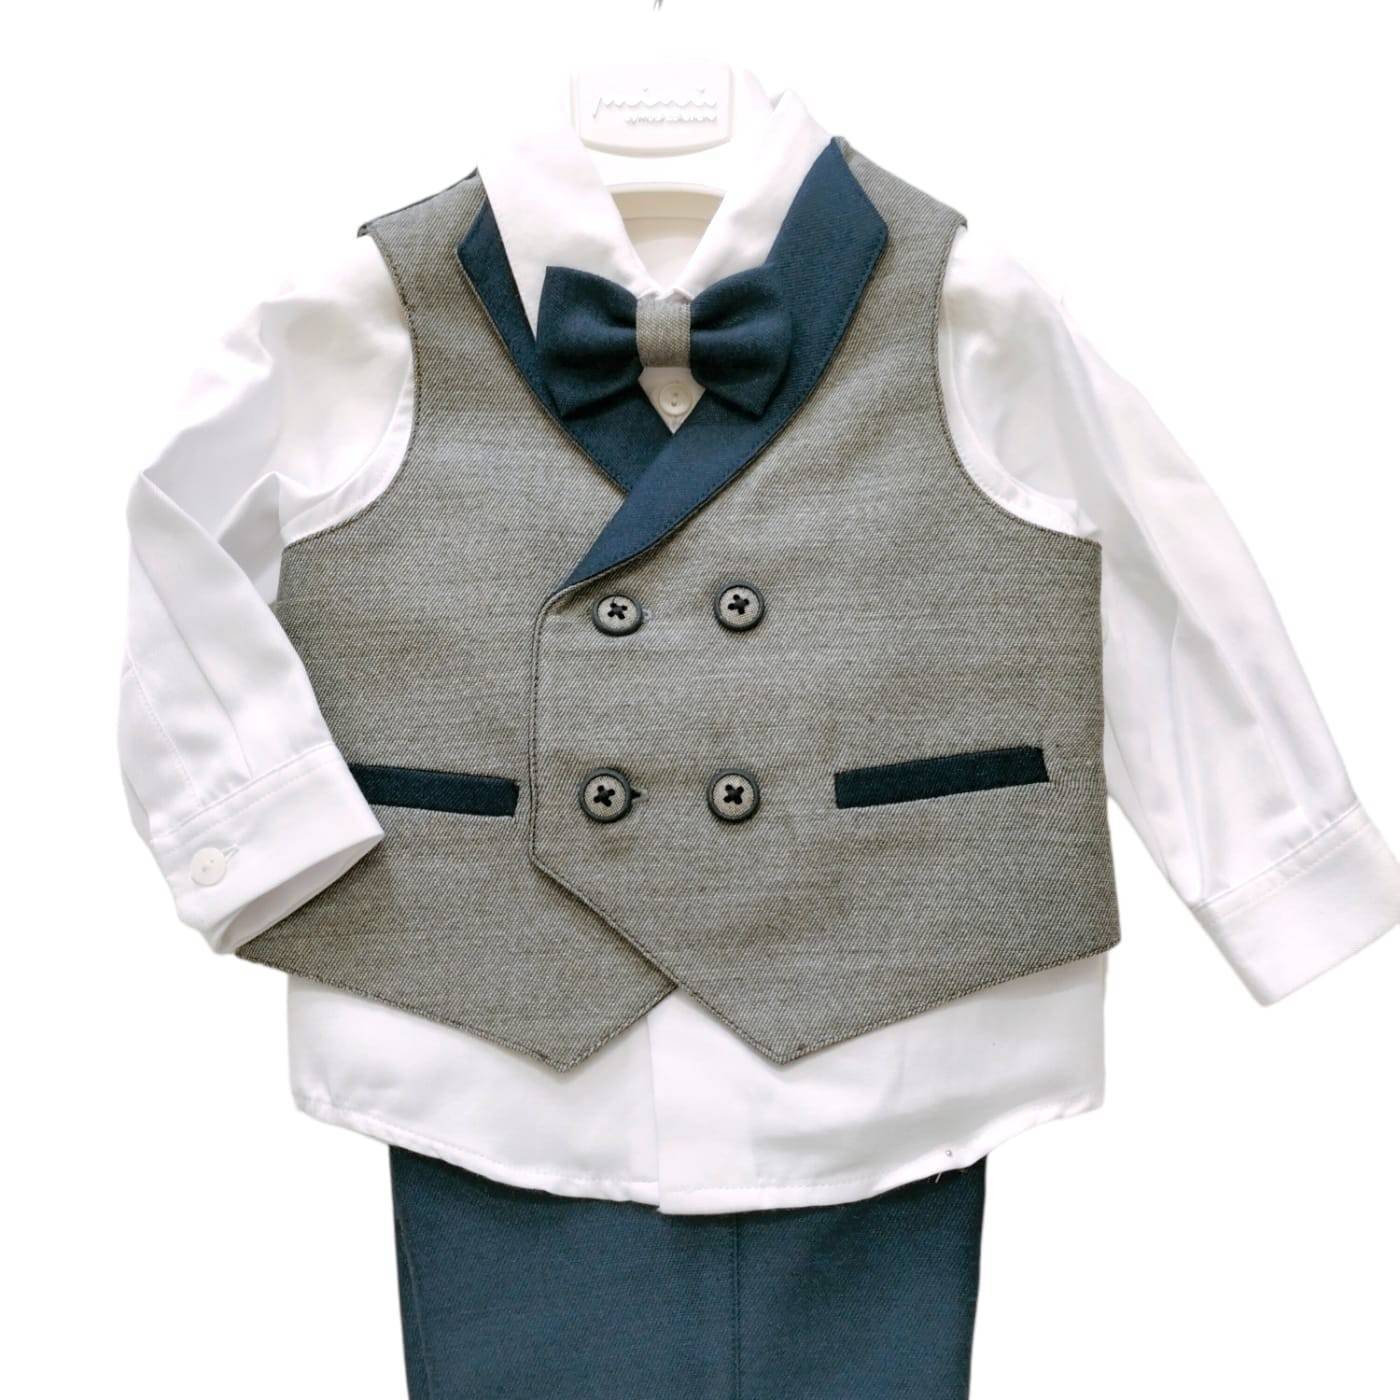 BABY BOY DRESS SHIRT 3-6 MONTHS KOALA KIDS 100% COTTON | eBay